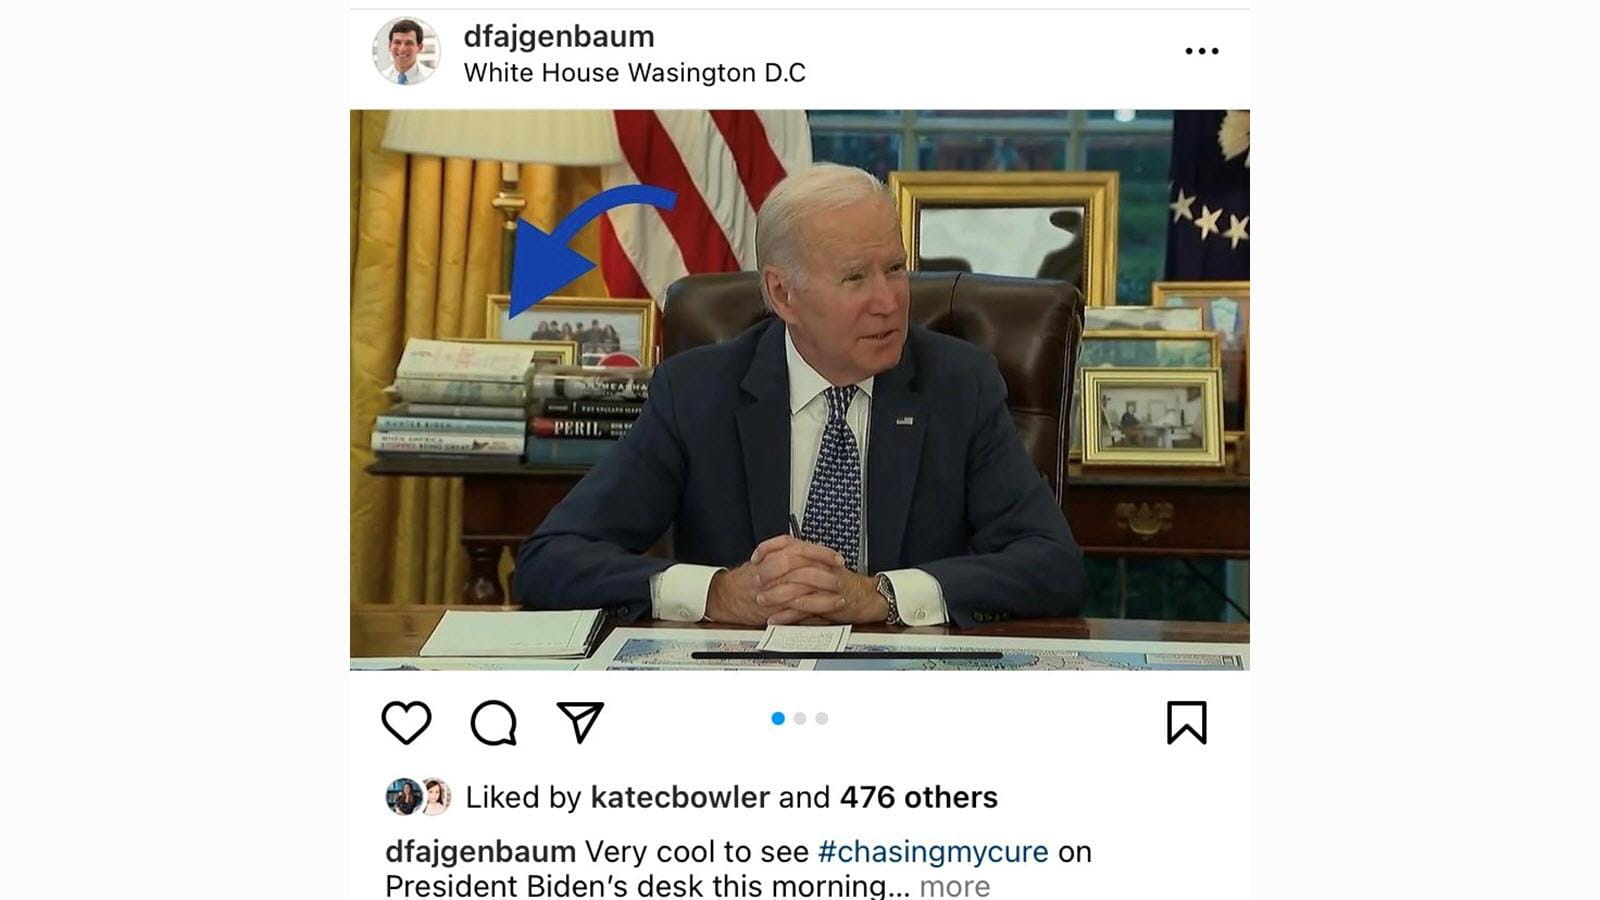 Instagram post from Dr. David Fajgenbaum showing his book on President Joe Biden's desk